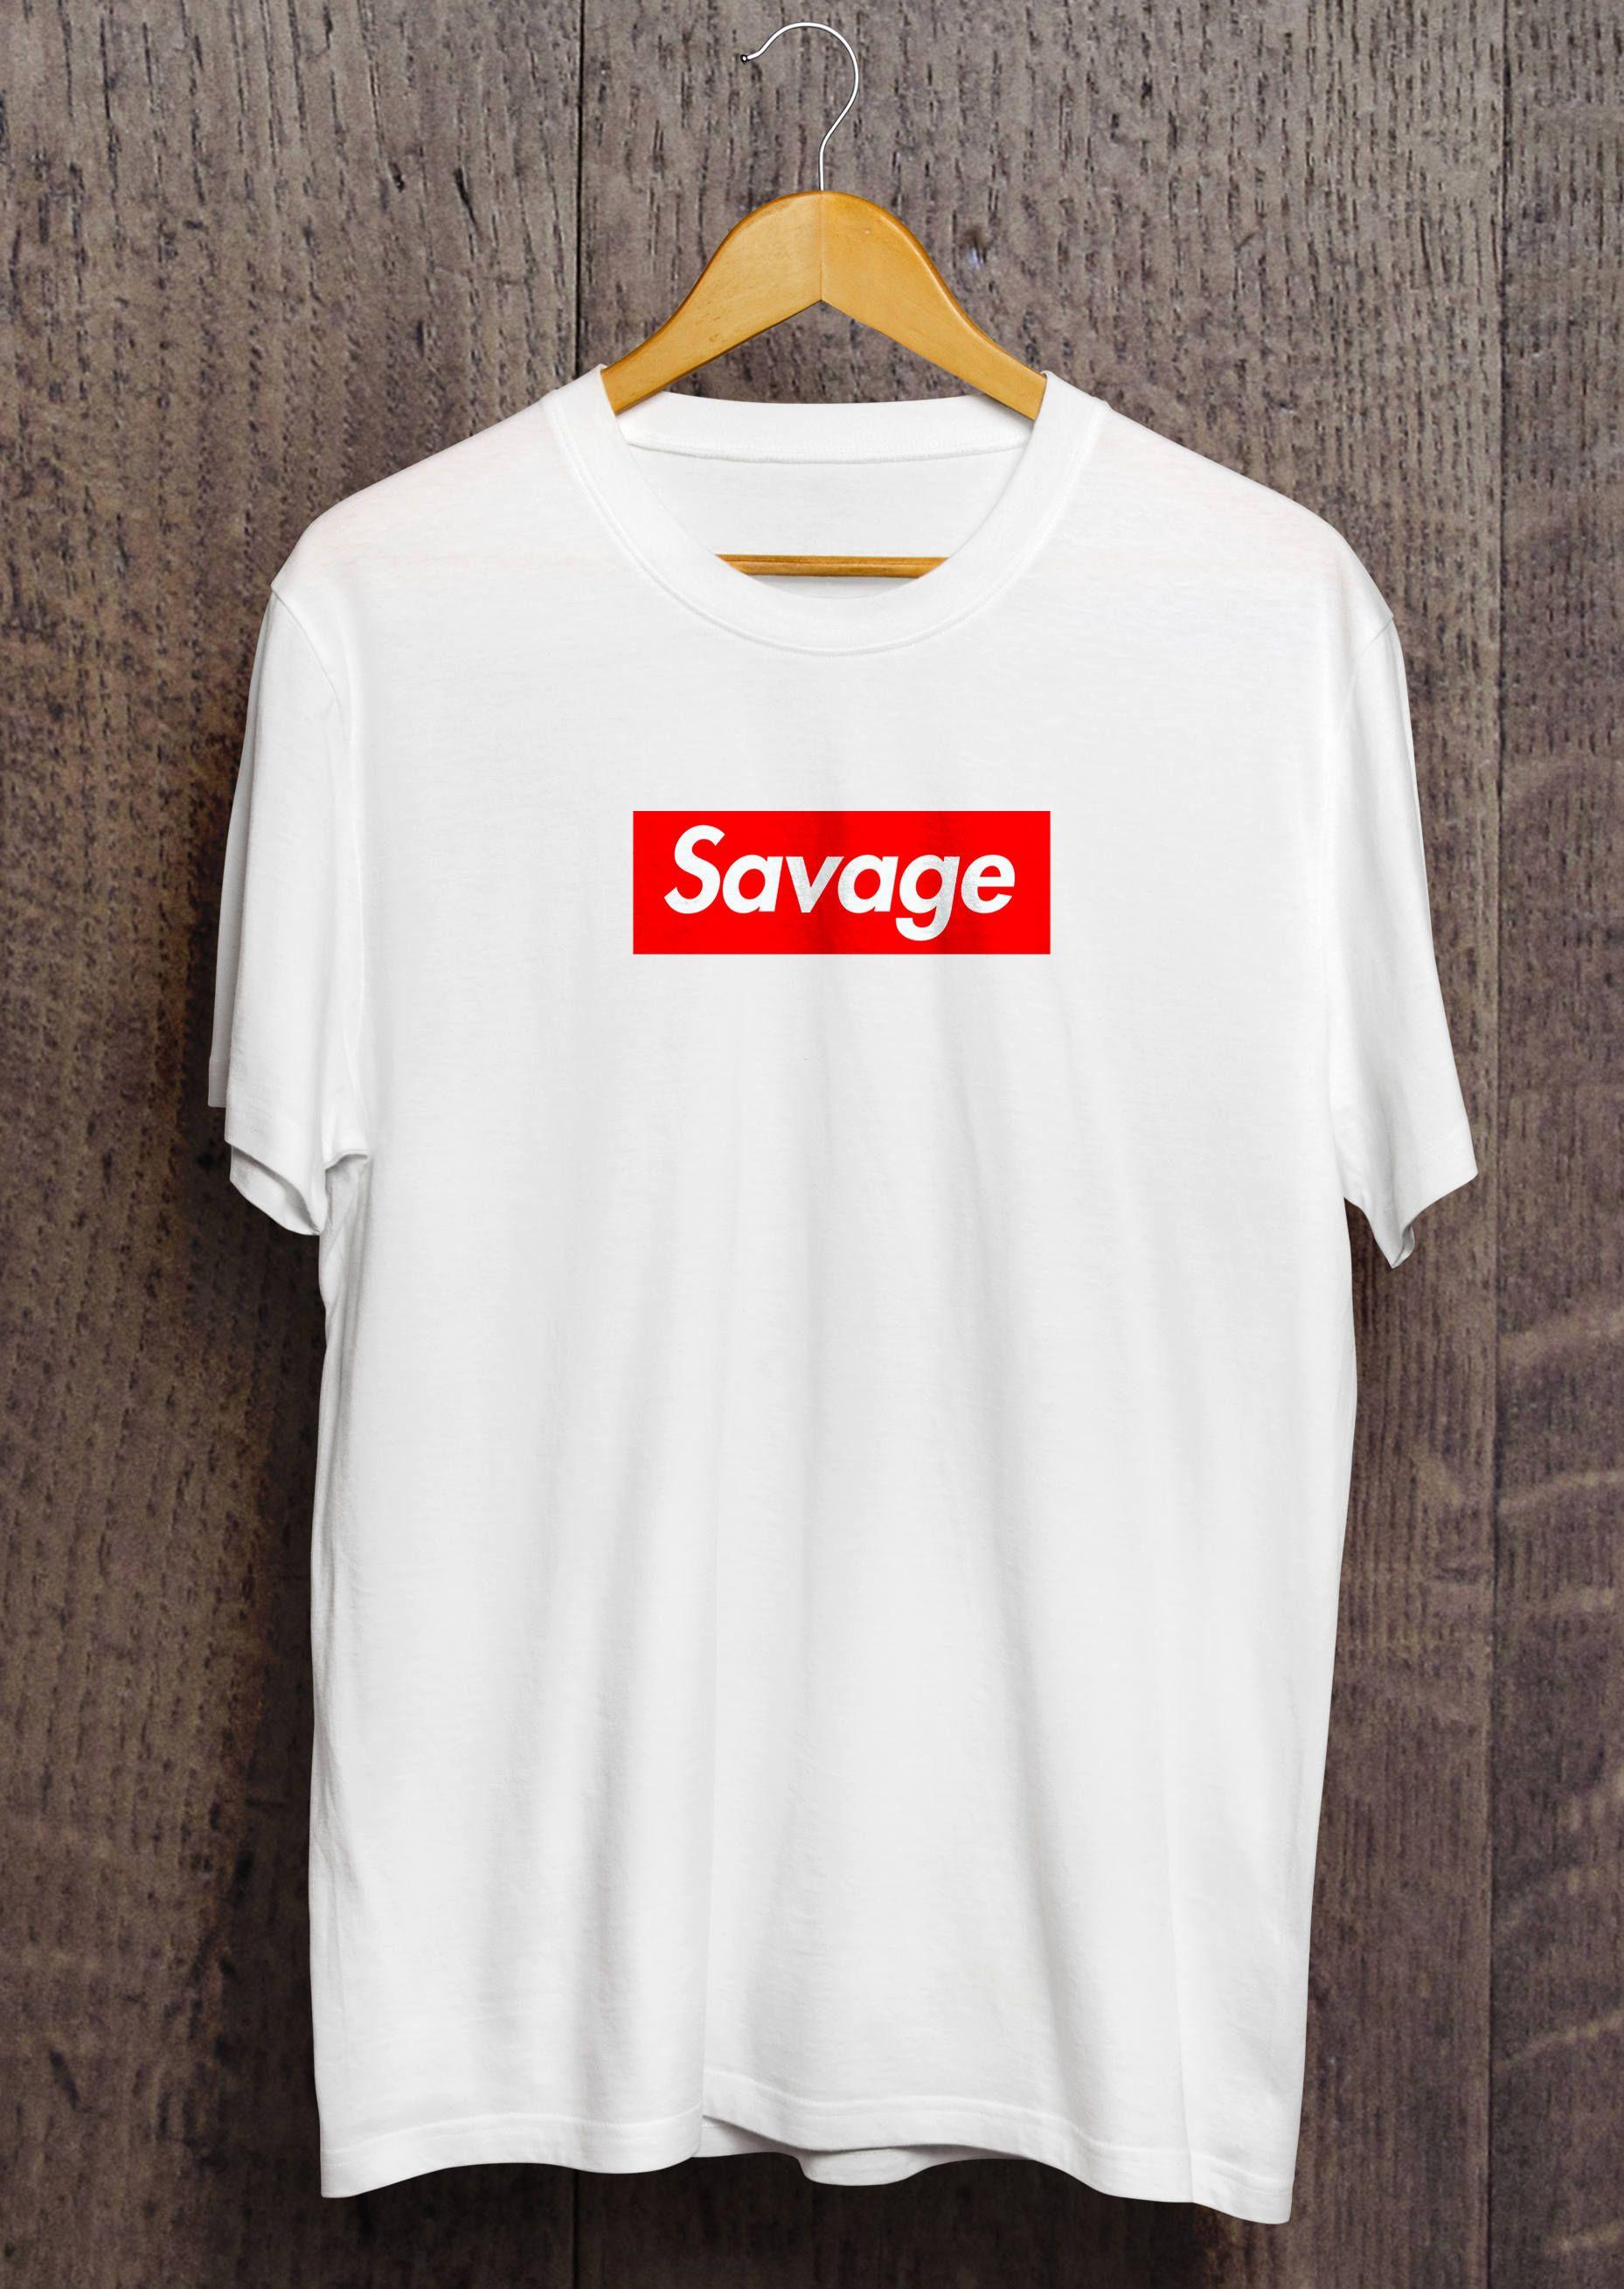 Savage Clothing Logo - Savage Box Logo Shirt 21 Supreme Parody Unisex T-Shirt | Cool Vibes ...